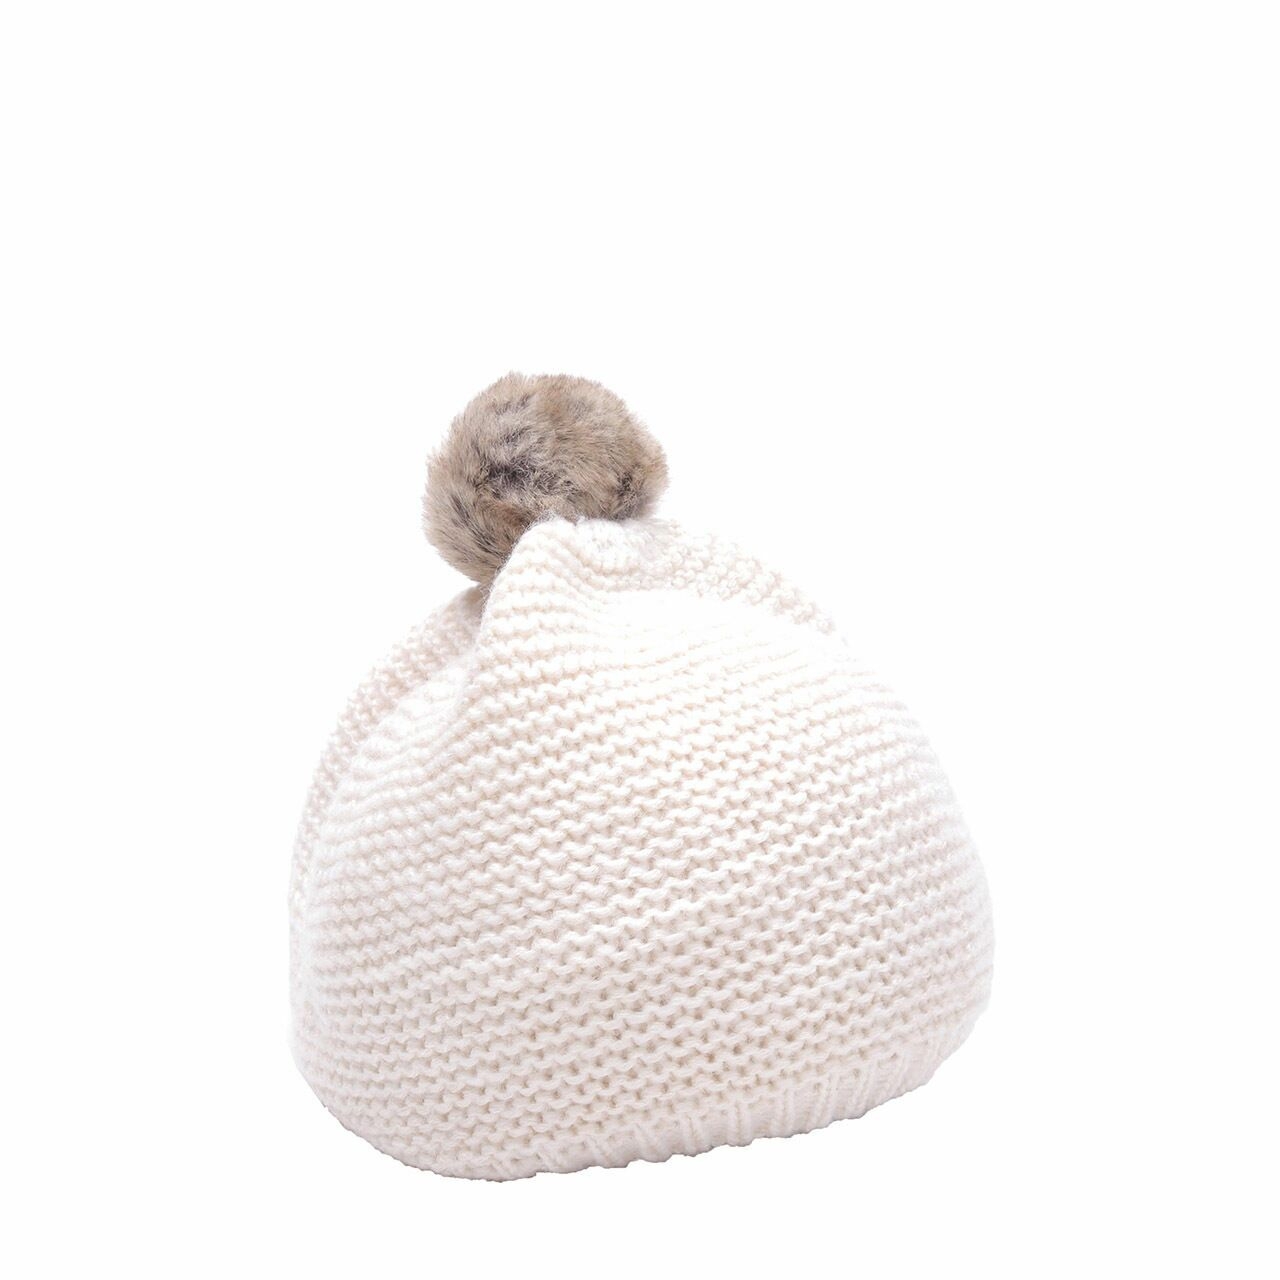 H&M Off White Knit Pom Pom Hats